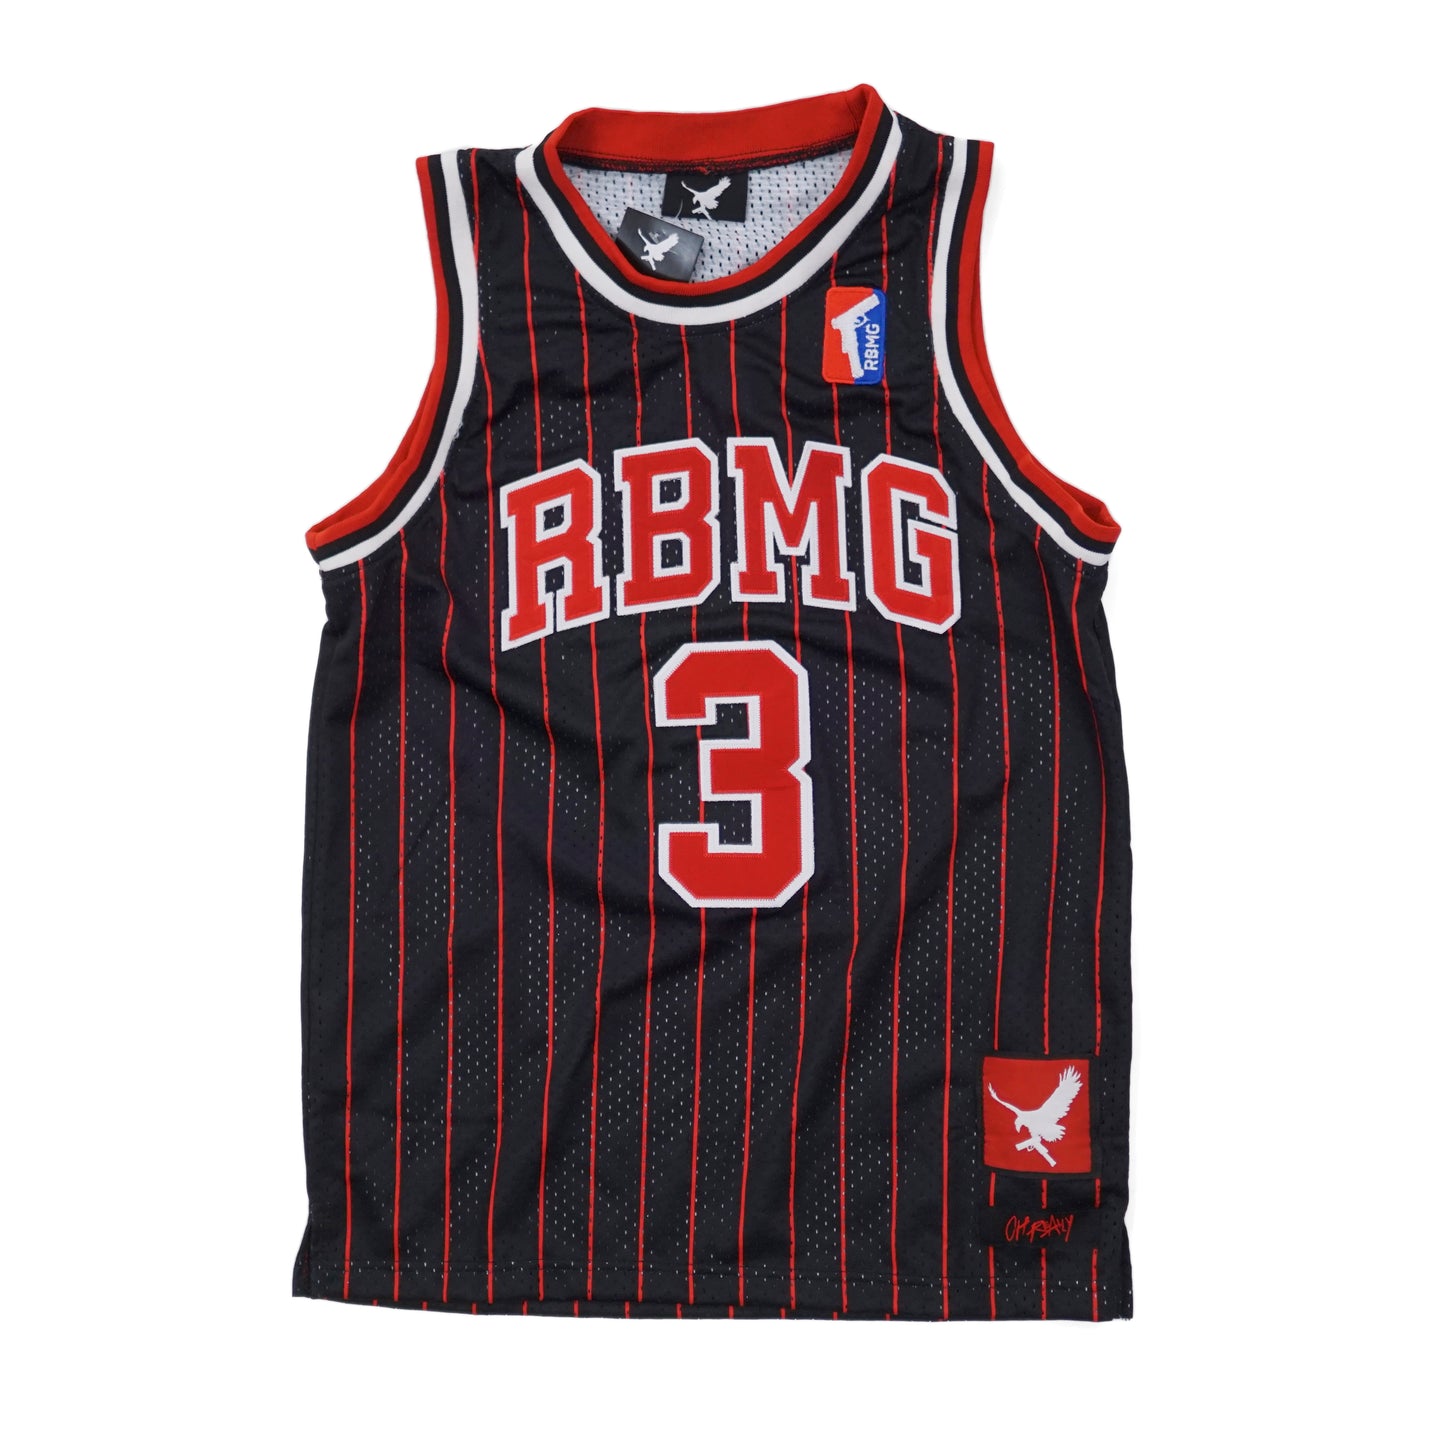 RBMG OG Basketball Jersey